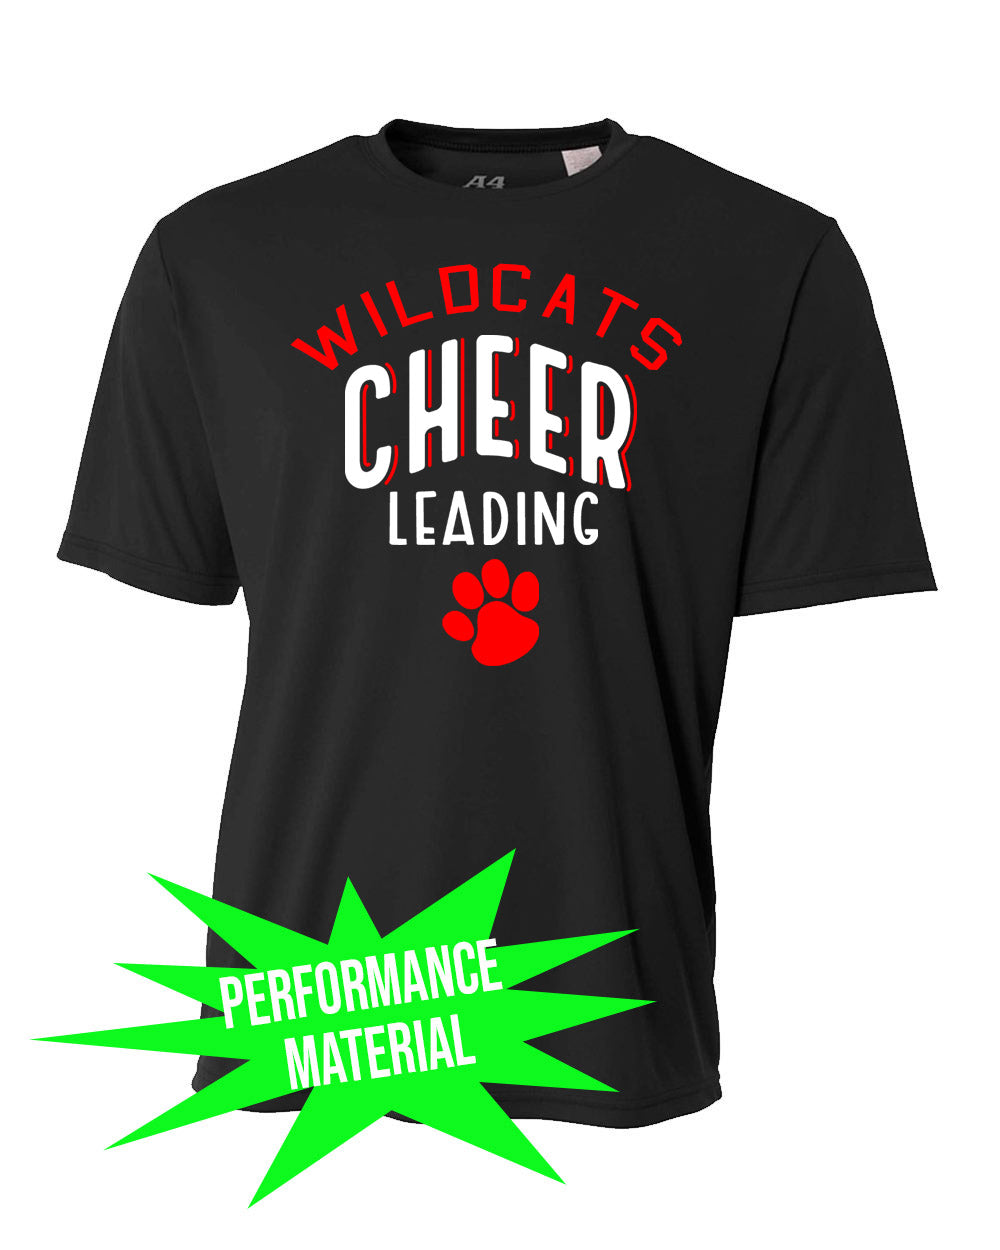 cheer team shirt designs